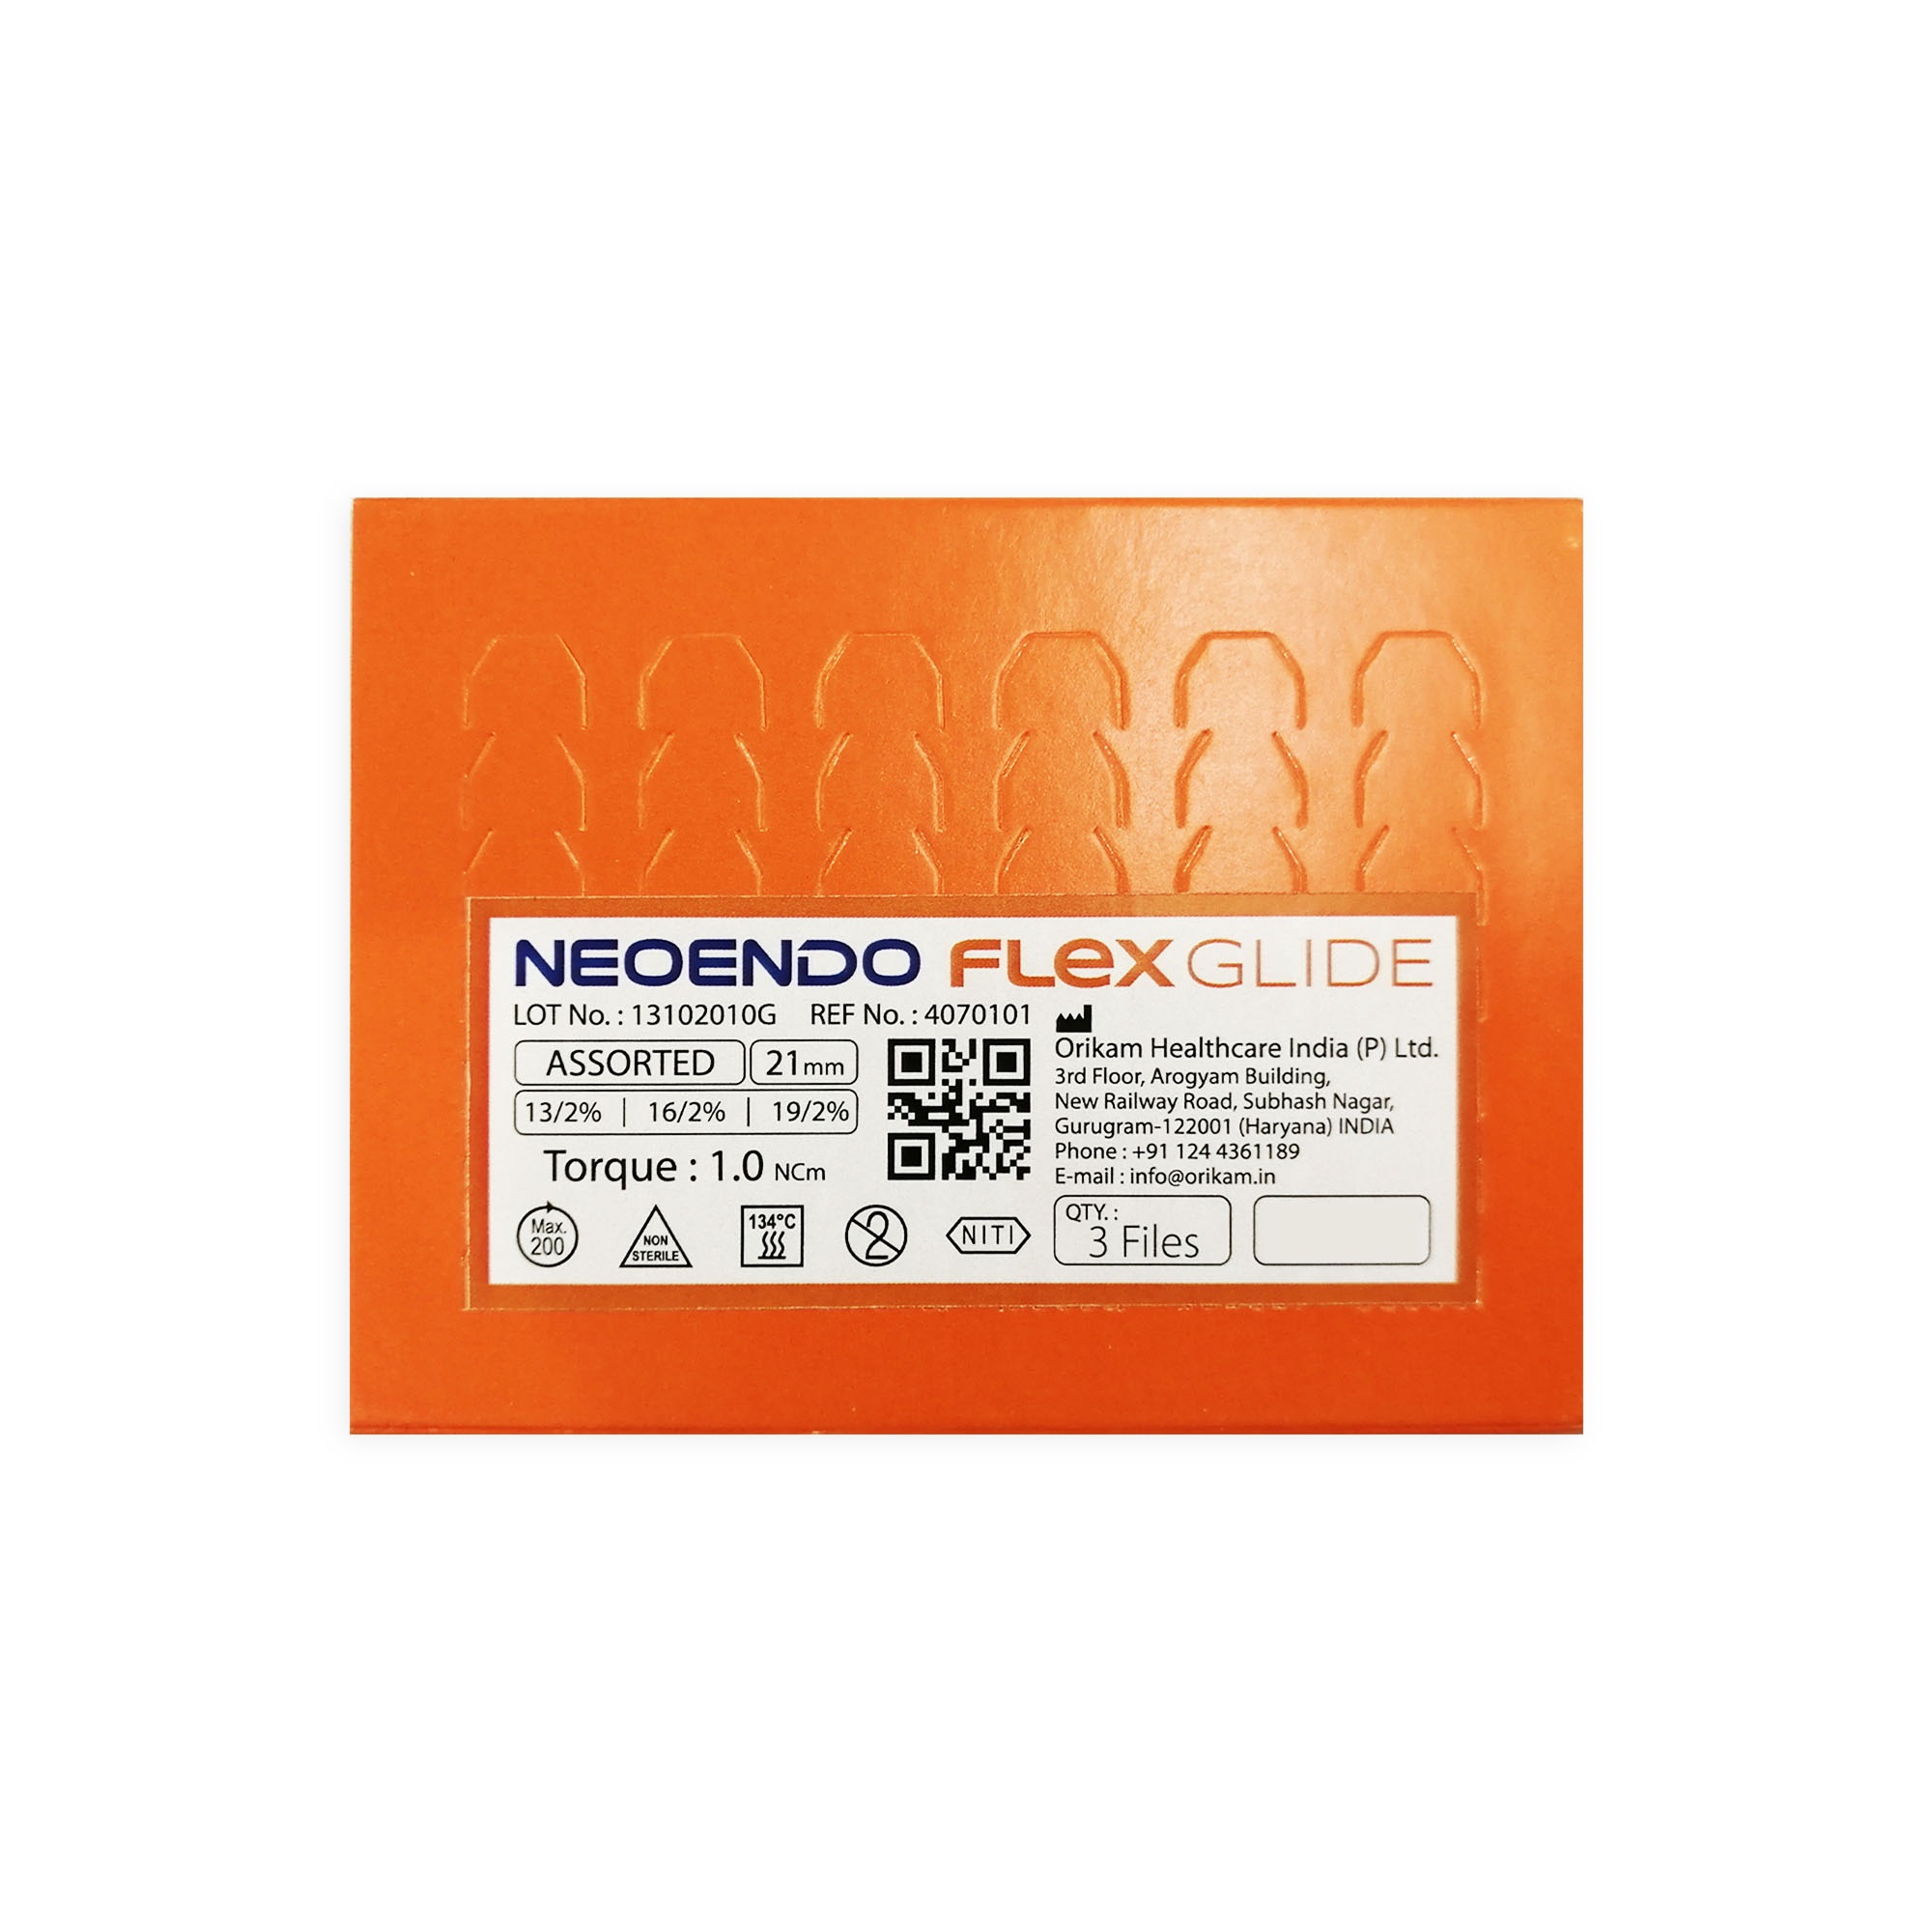 Orikam NeoEndo Flex Glide 25mm Endodontic Rotary Files 19/2